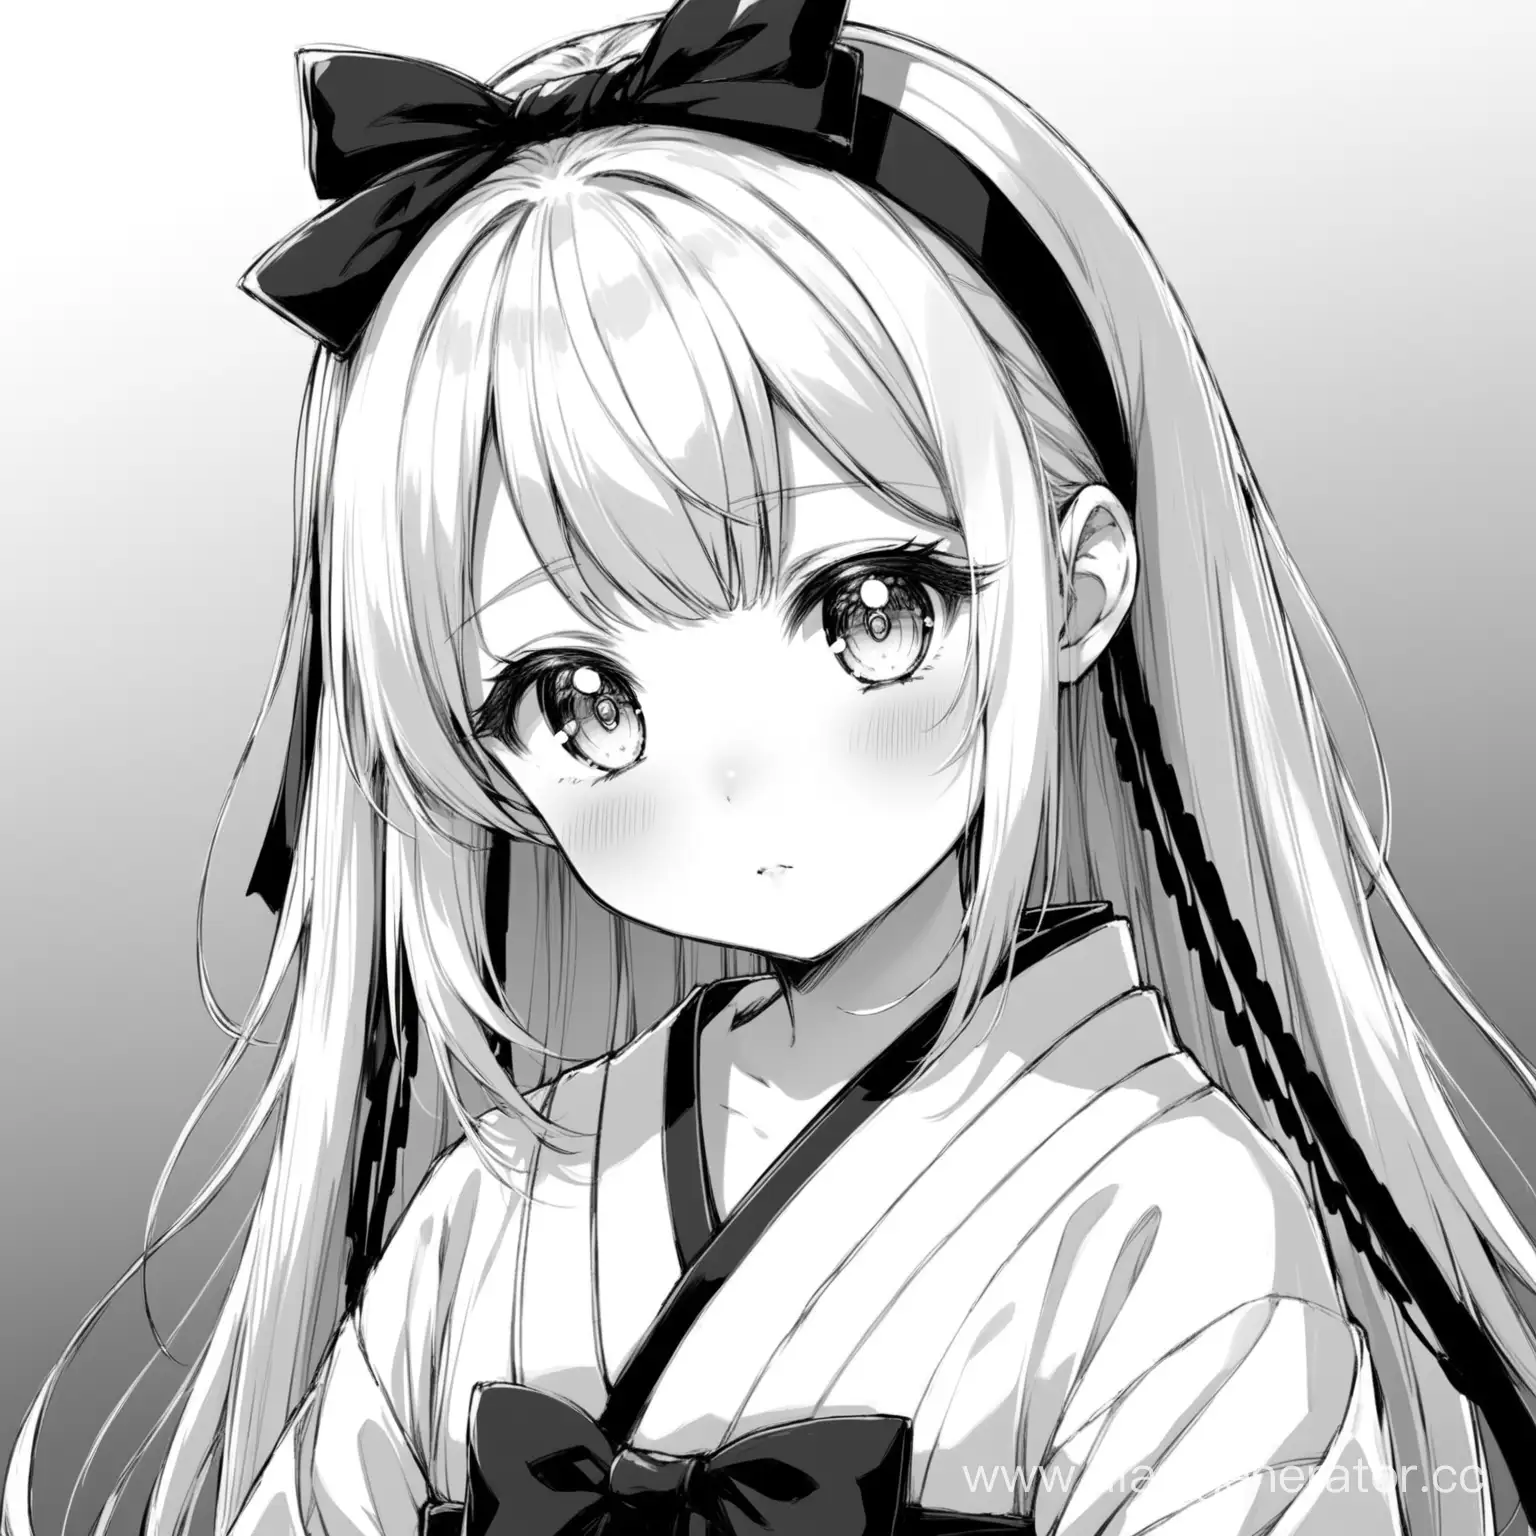 Elegant-Anime-Girl-Loli-in-Kimono-Dress-with-White-Hair-and-Ribbons